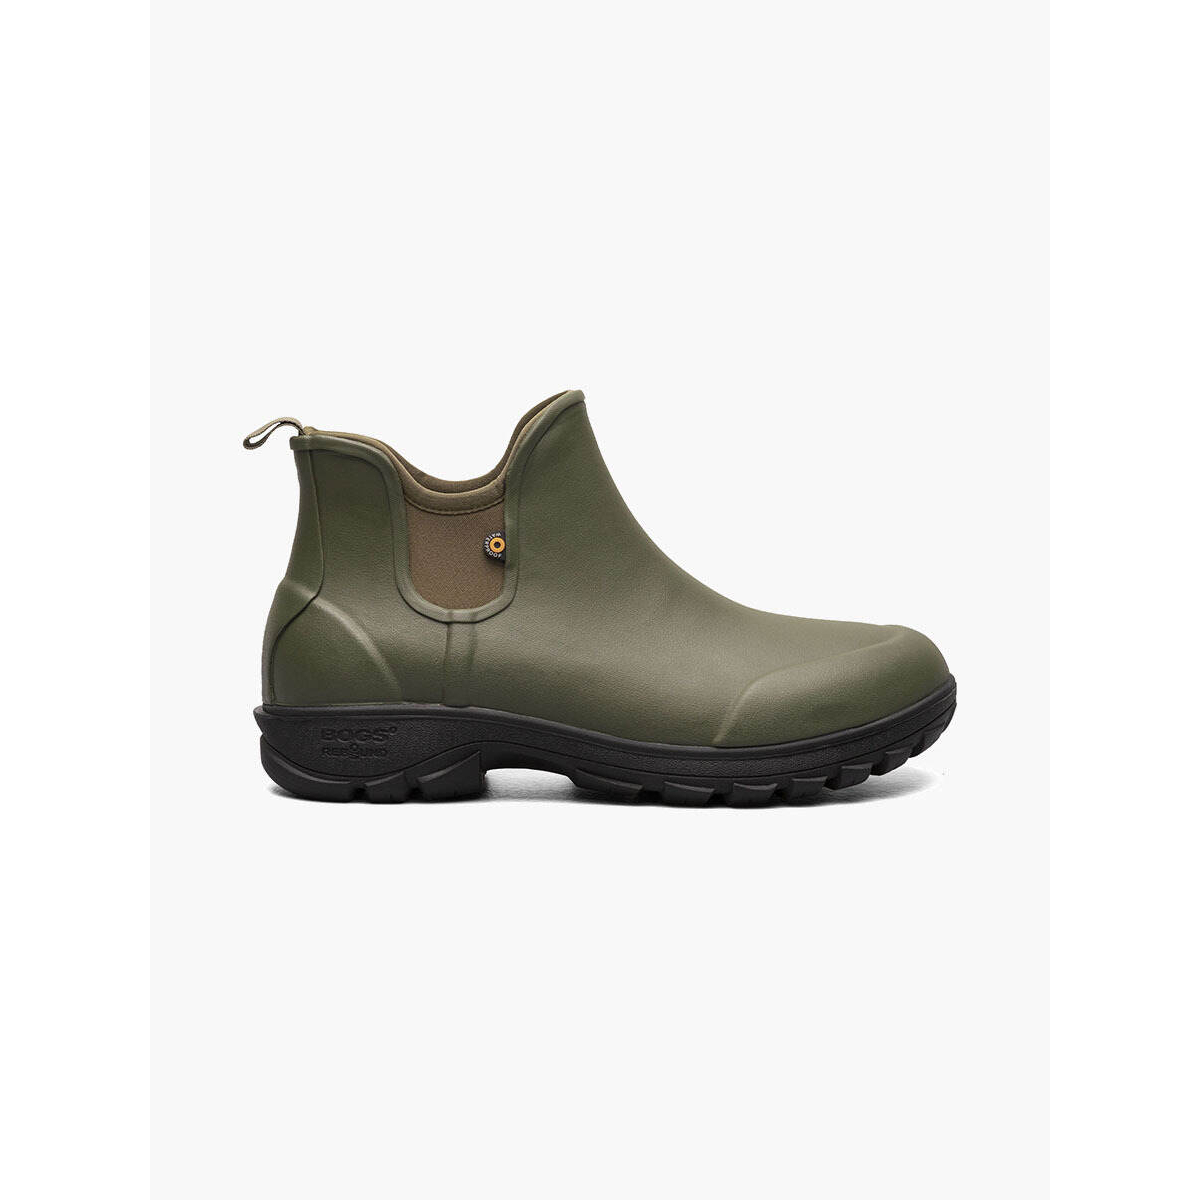 BOGS Men's Sauvie Slip On Insulated Waterproof Rain Boot Olive Multi - 72208-302 - OLIVE MLTI, 8